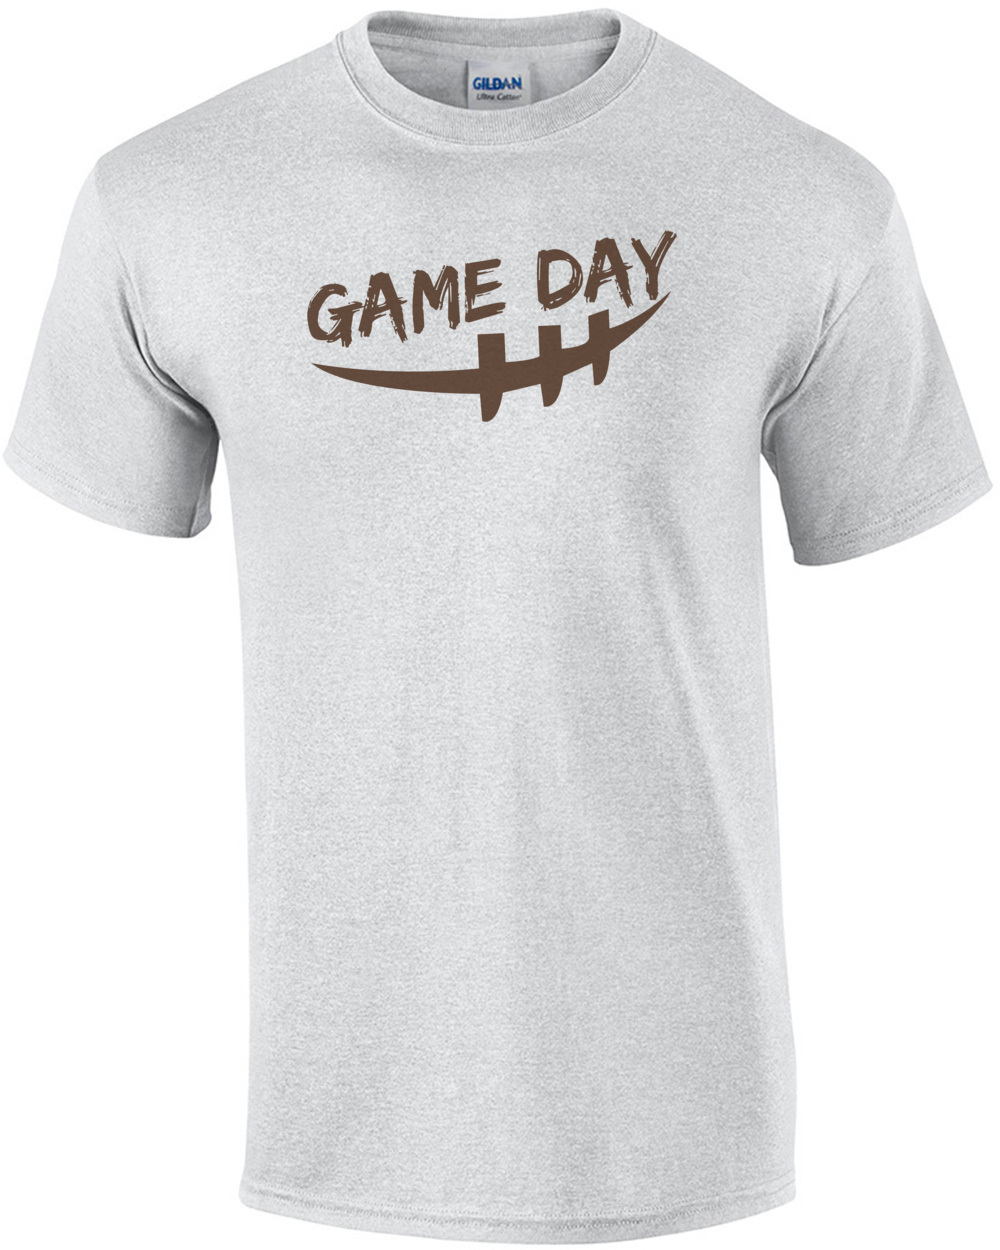 Game day Sweatshirt Game Day Shirt Women Football Shirt Football Season Tee Tampa Bay Game Day Football Shirt